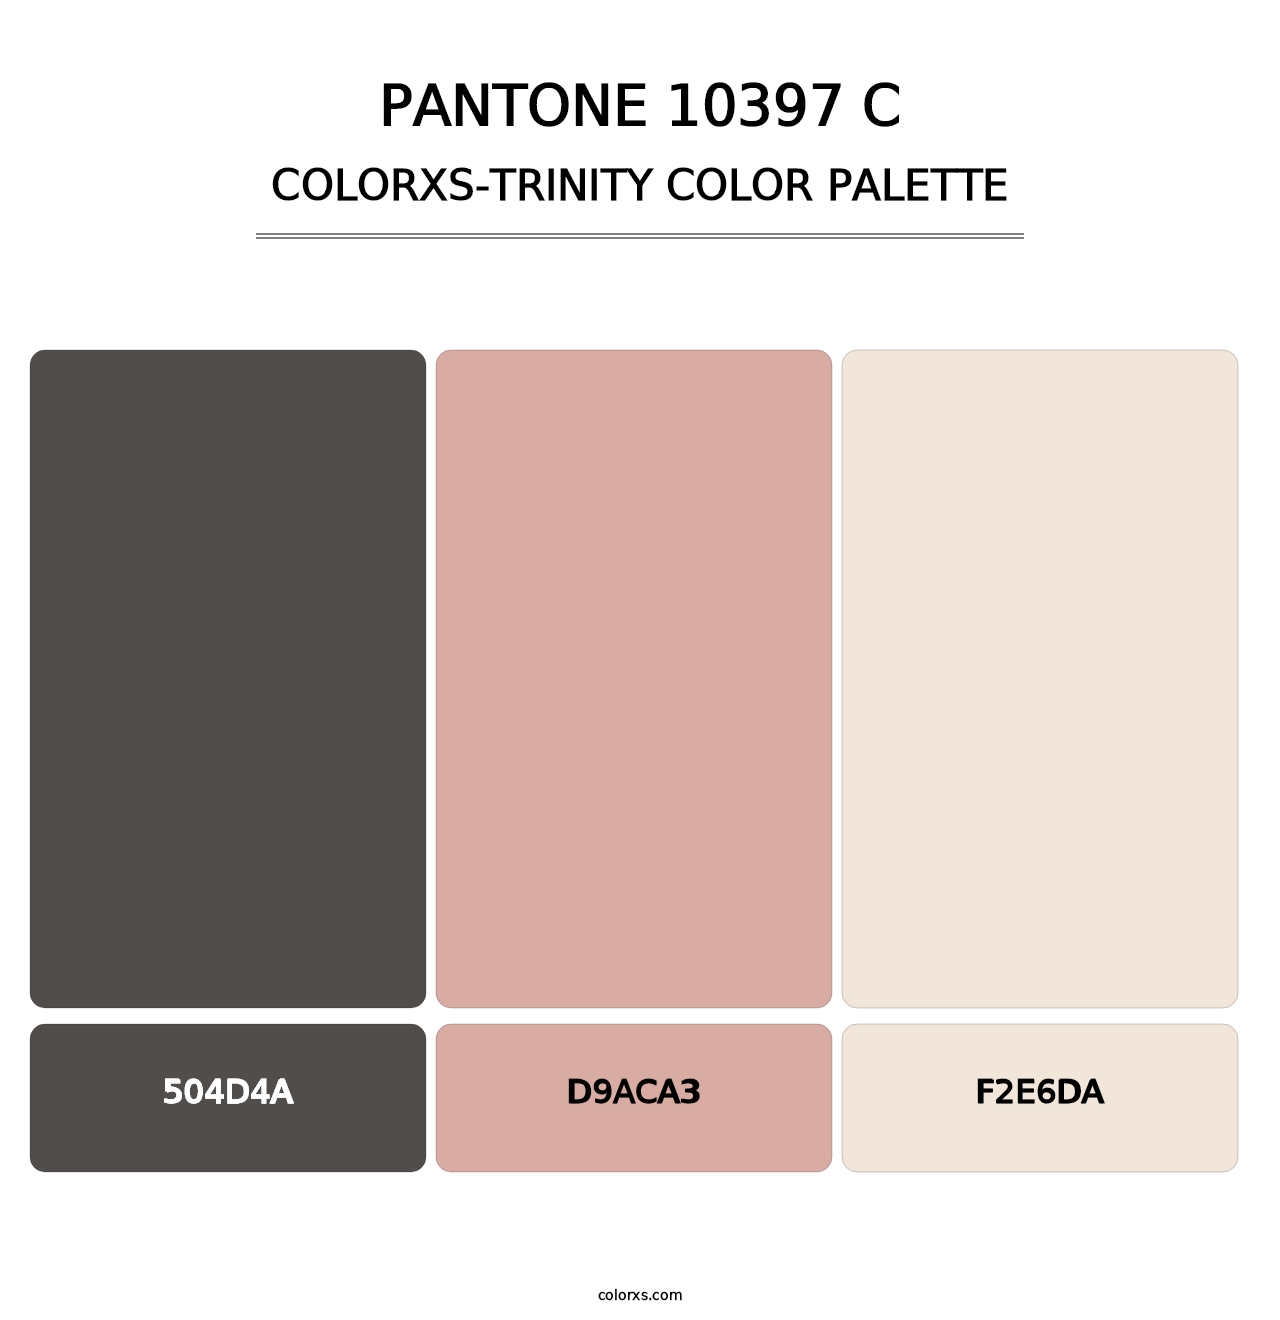 PANTONE 10397 C - Colorxs Trinity Palette